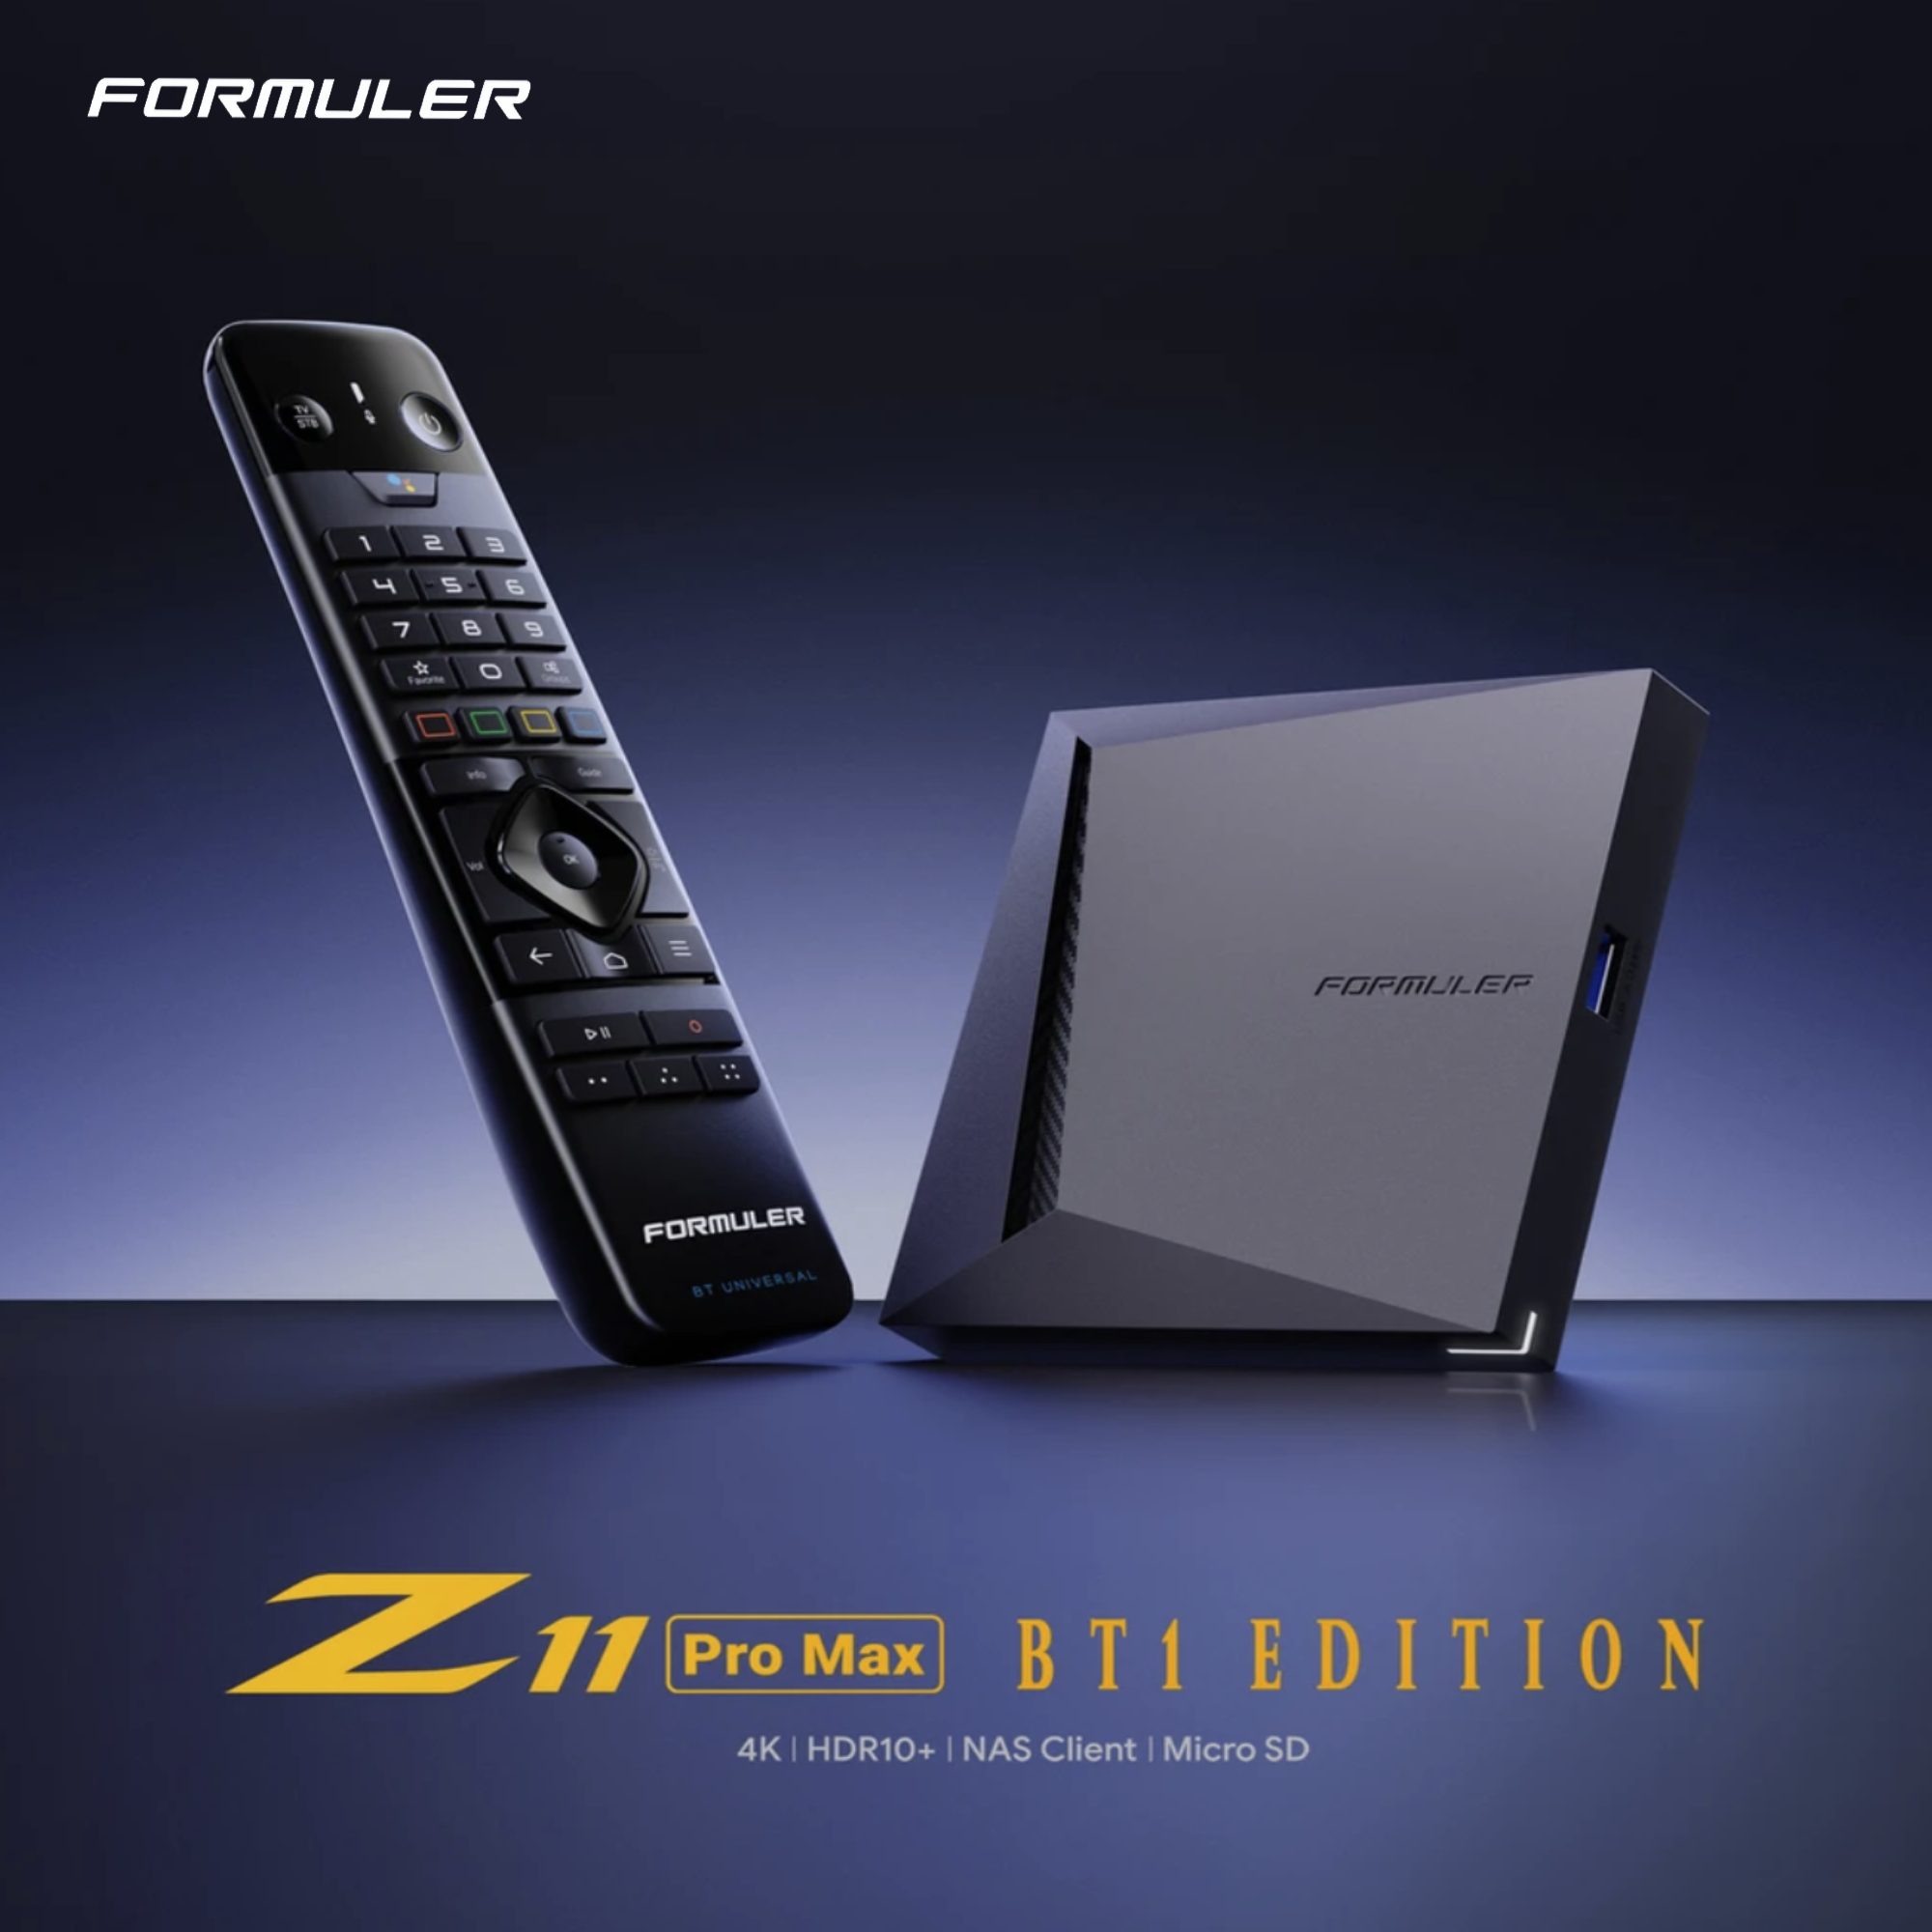 FORMULER Edition Z11 Pro GB 32 Max BT1